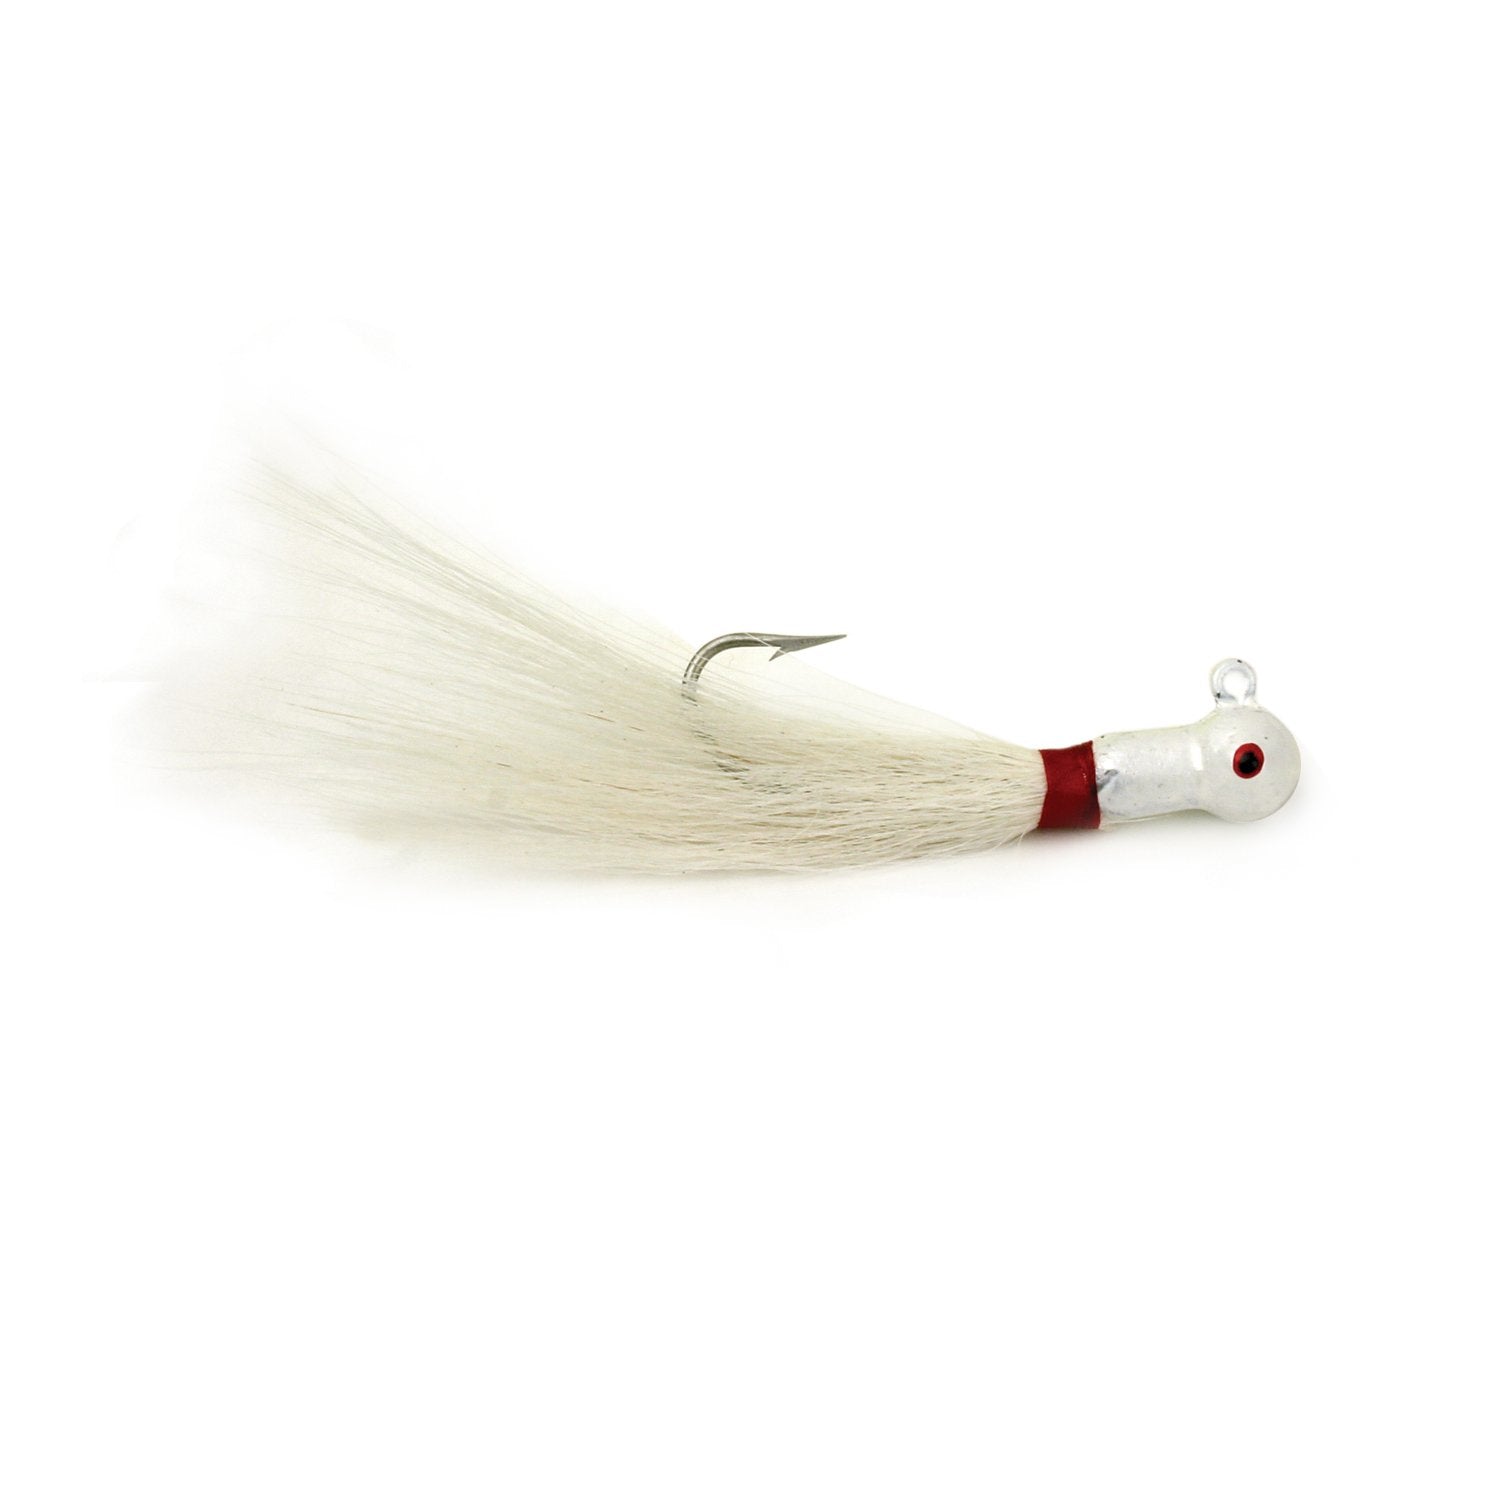 10pks 1/4oz Fishing Bucktail Spinnerbait Hand-tied w/ Natural Deer Hair  Pink Whi